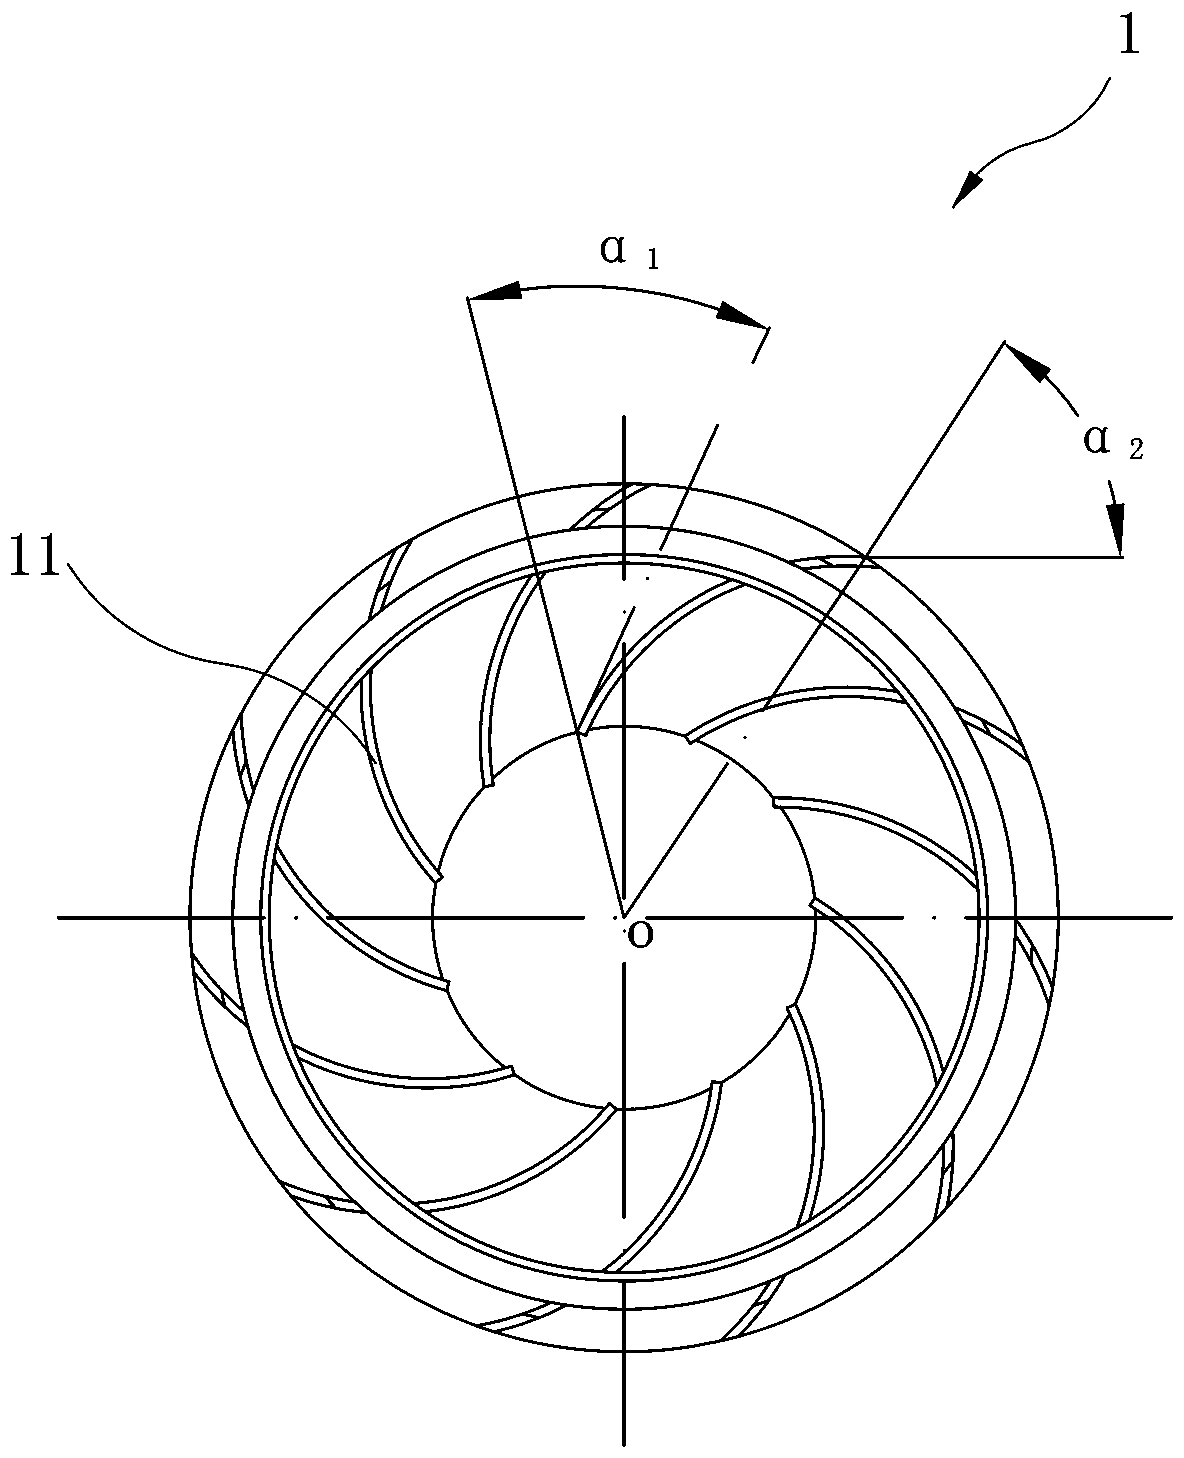 Design method for non-volute centrifugal wind wheel